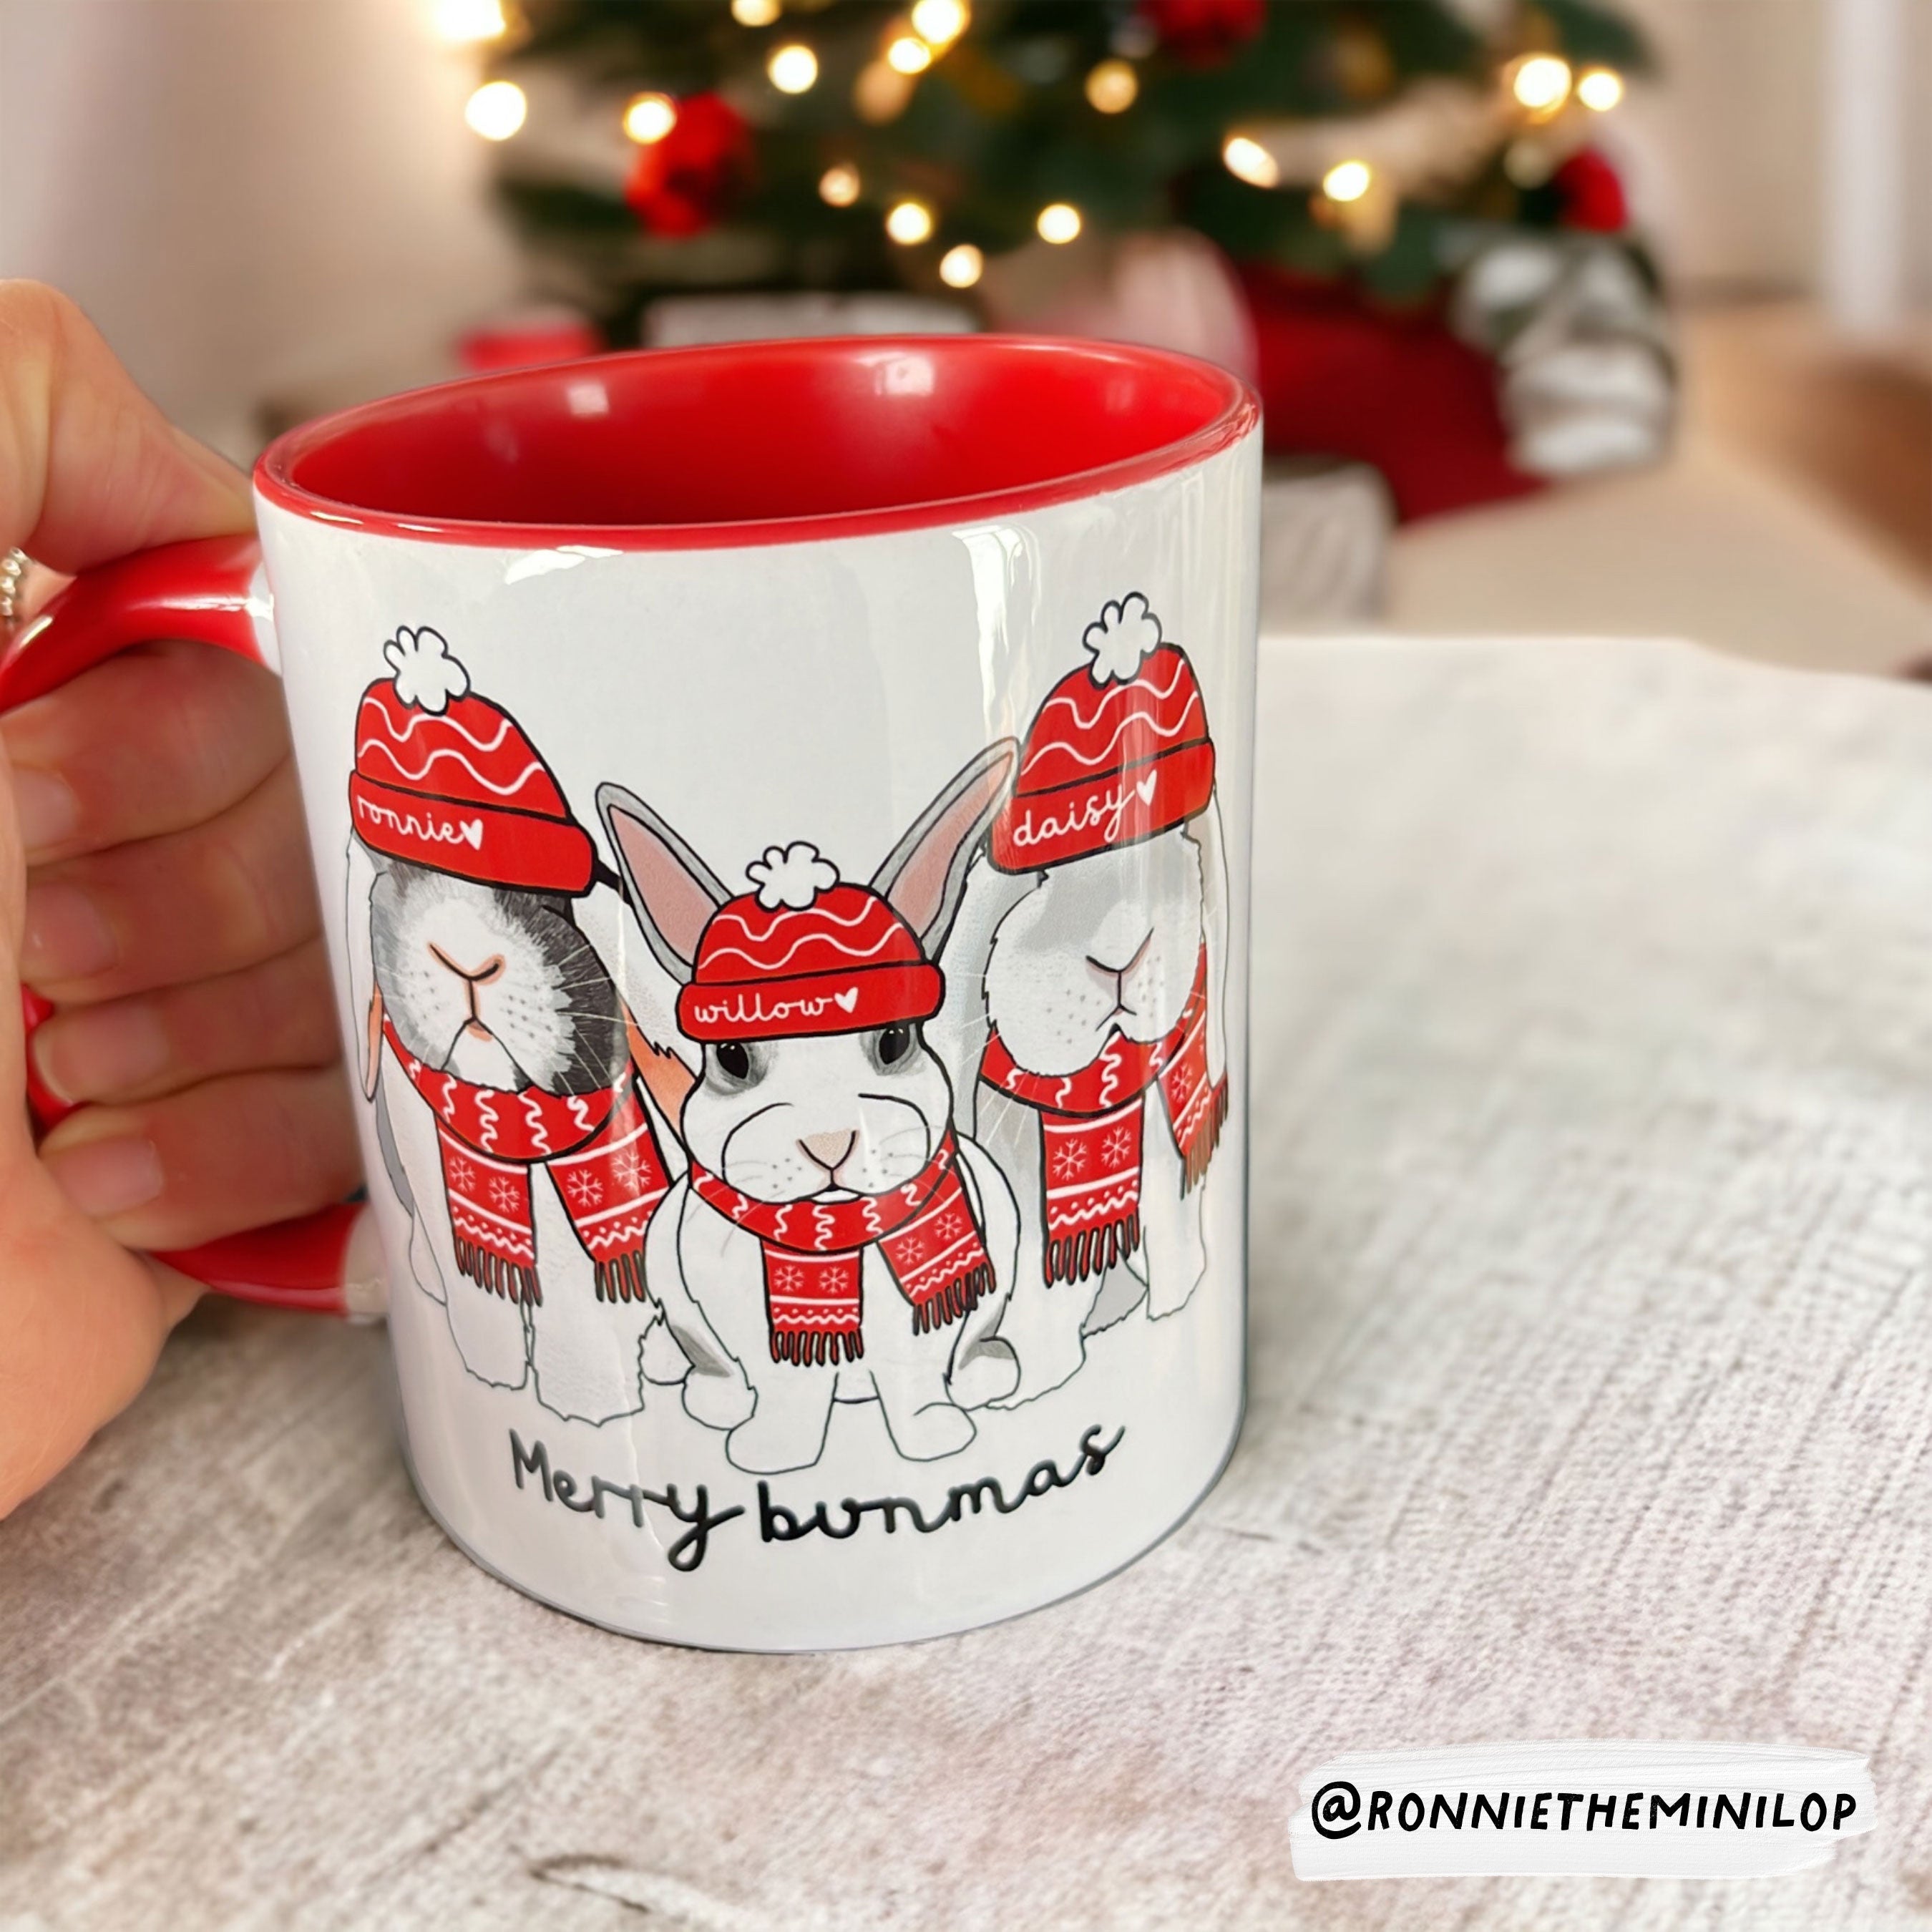 Personalised Merry Bunmas Christmas Mug